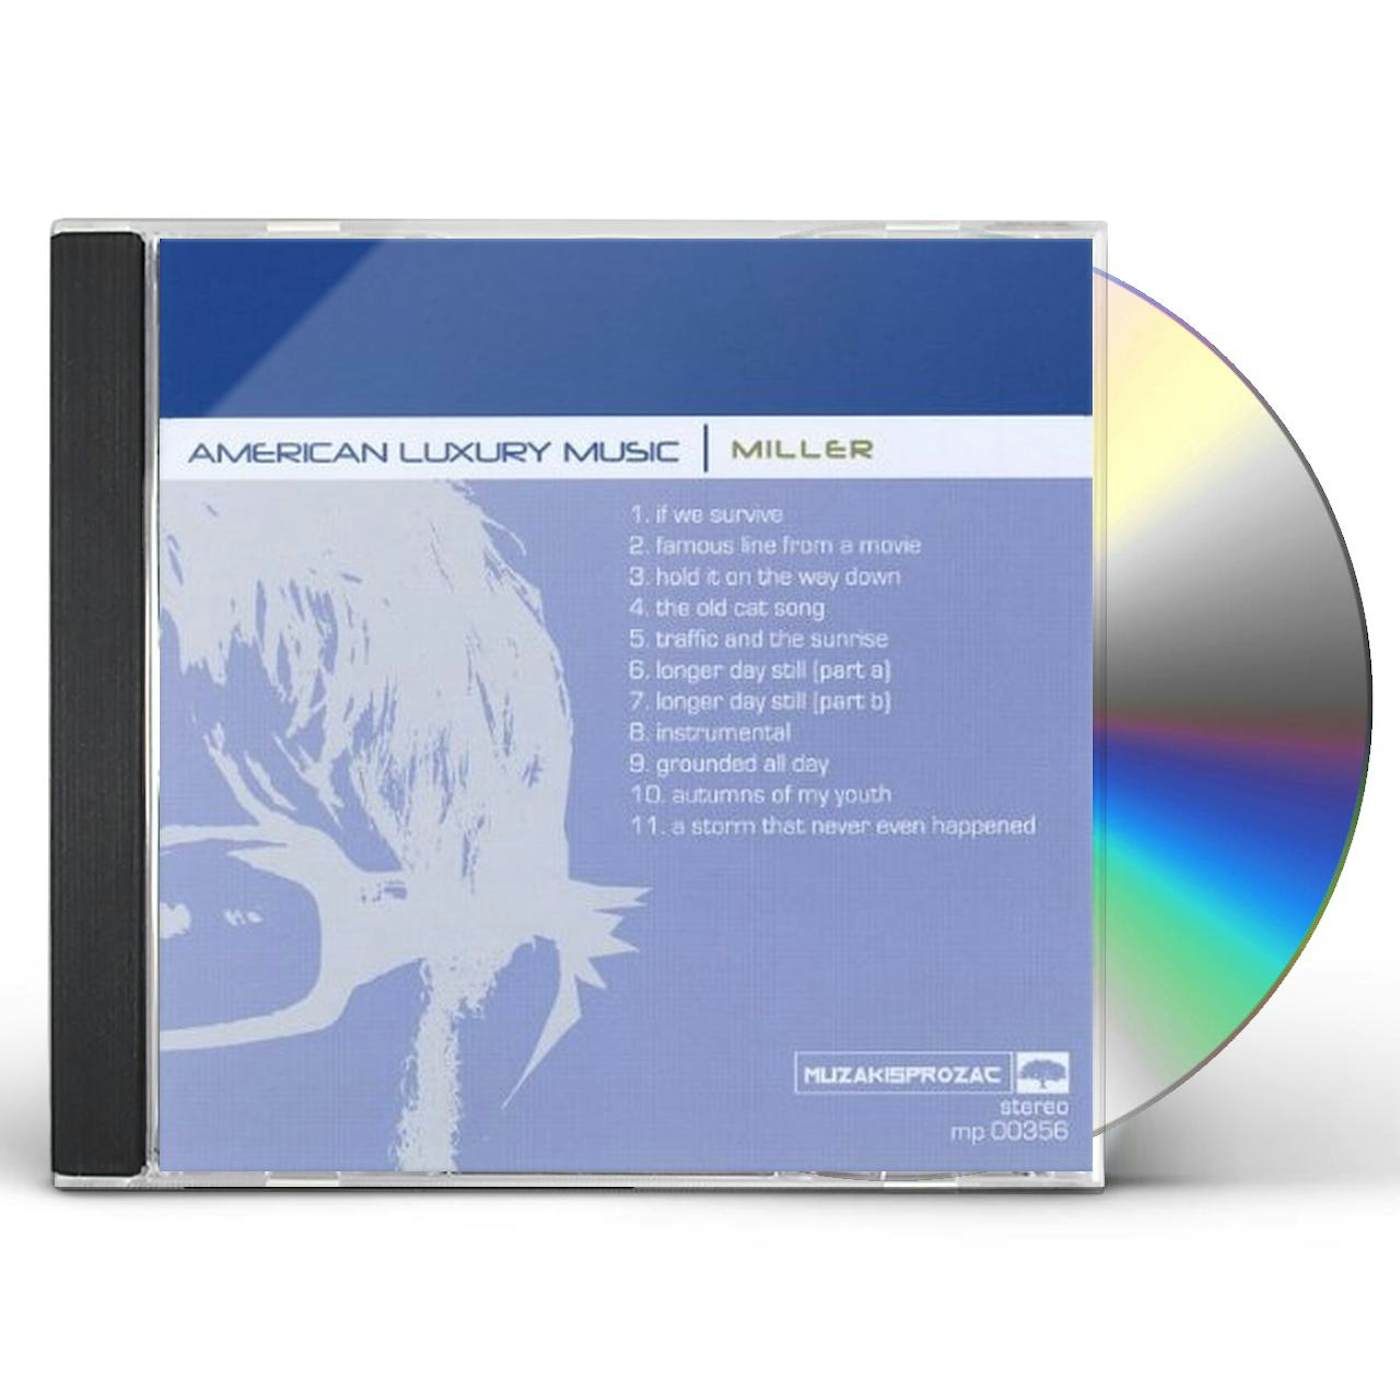 Miller AMERICAN LUXURY MUSIC CD